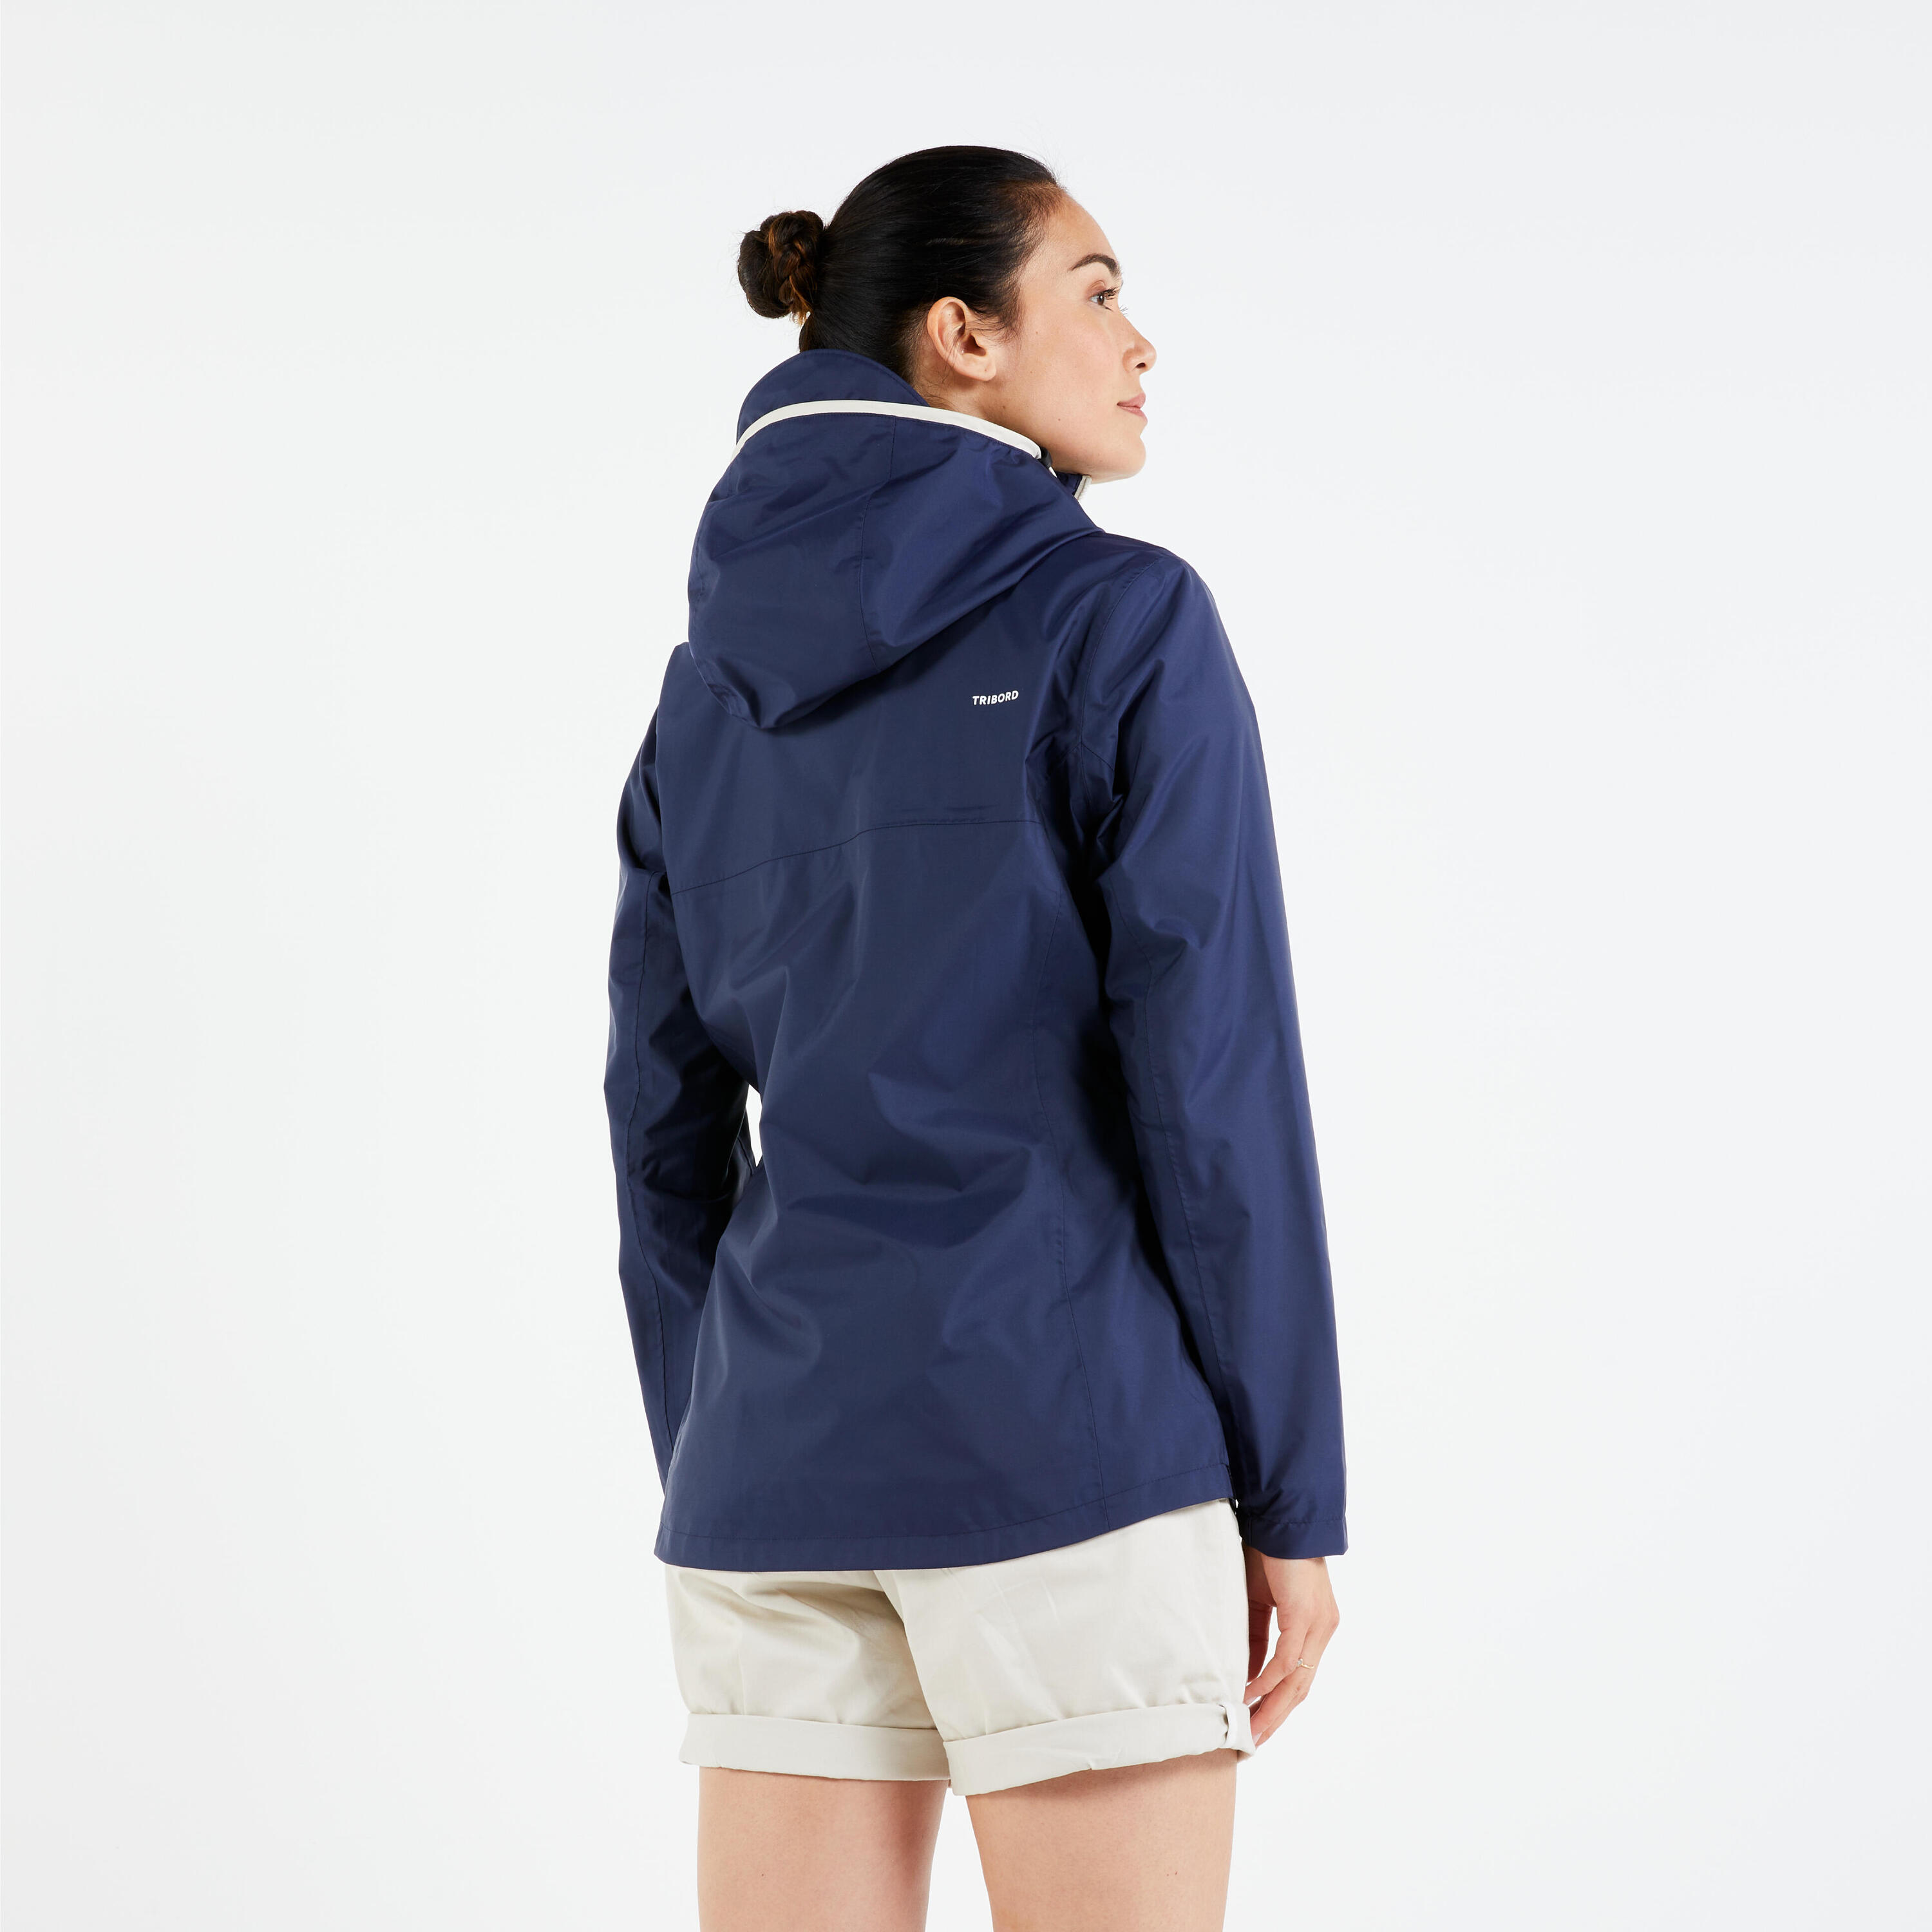 Women's sailing waterproof jacket - Wet-weather jacket SAILING 100 navy blue 4/8